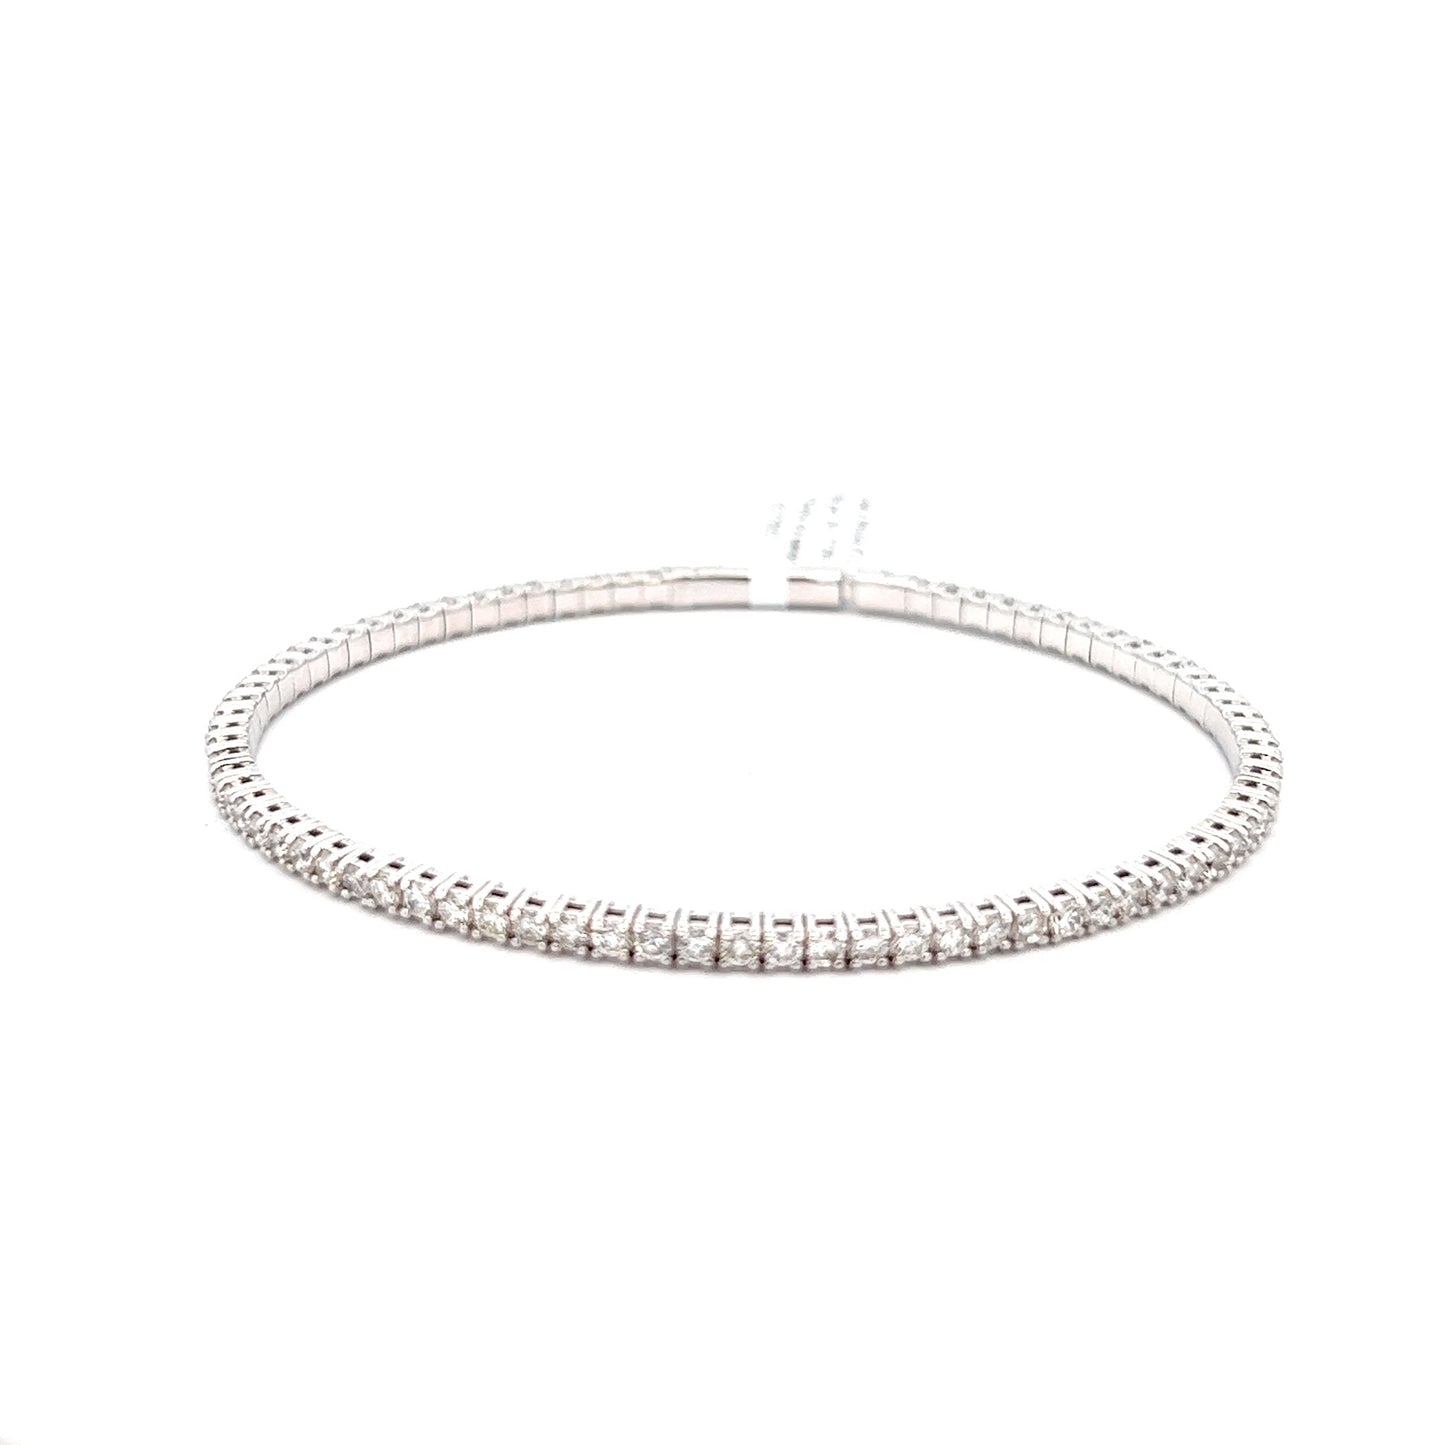 14k White Gold Flexible Diamond Bracelet - 2.75cttw